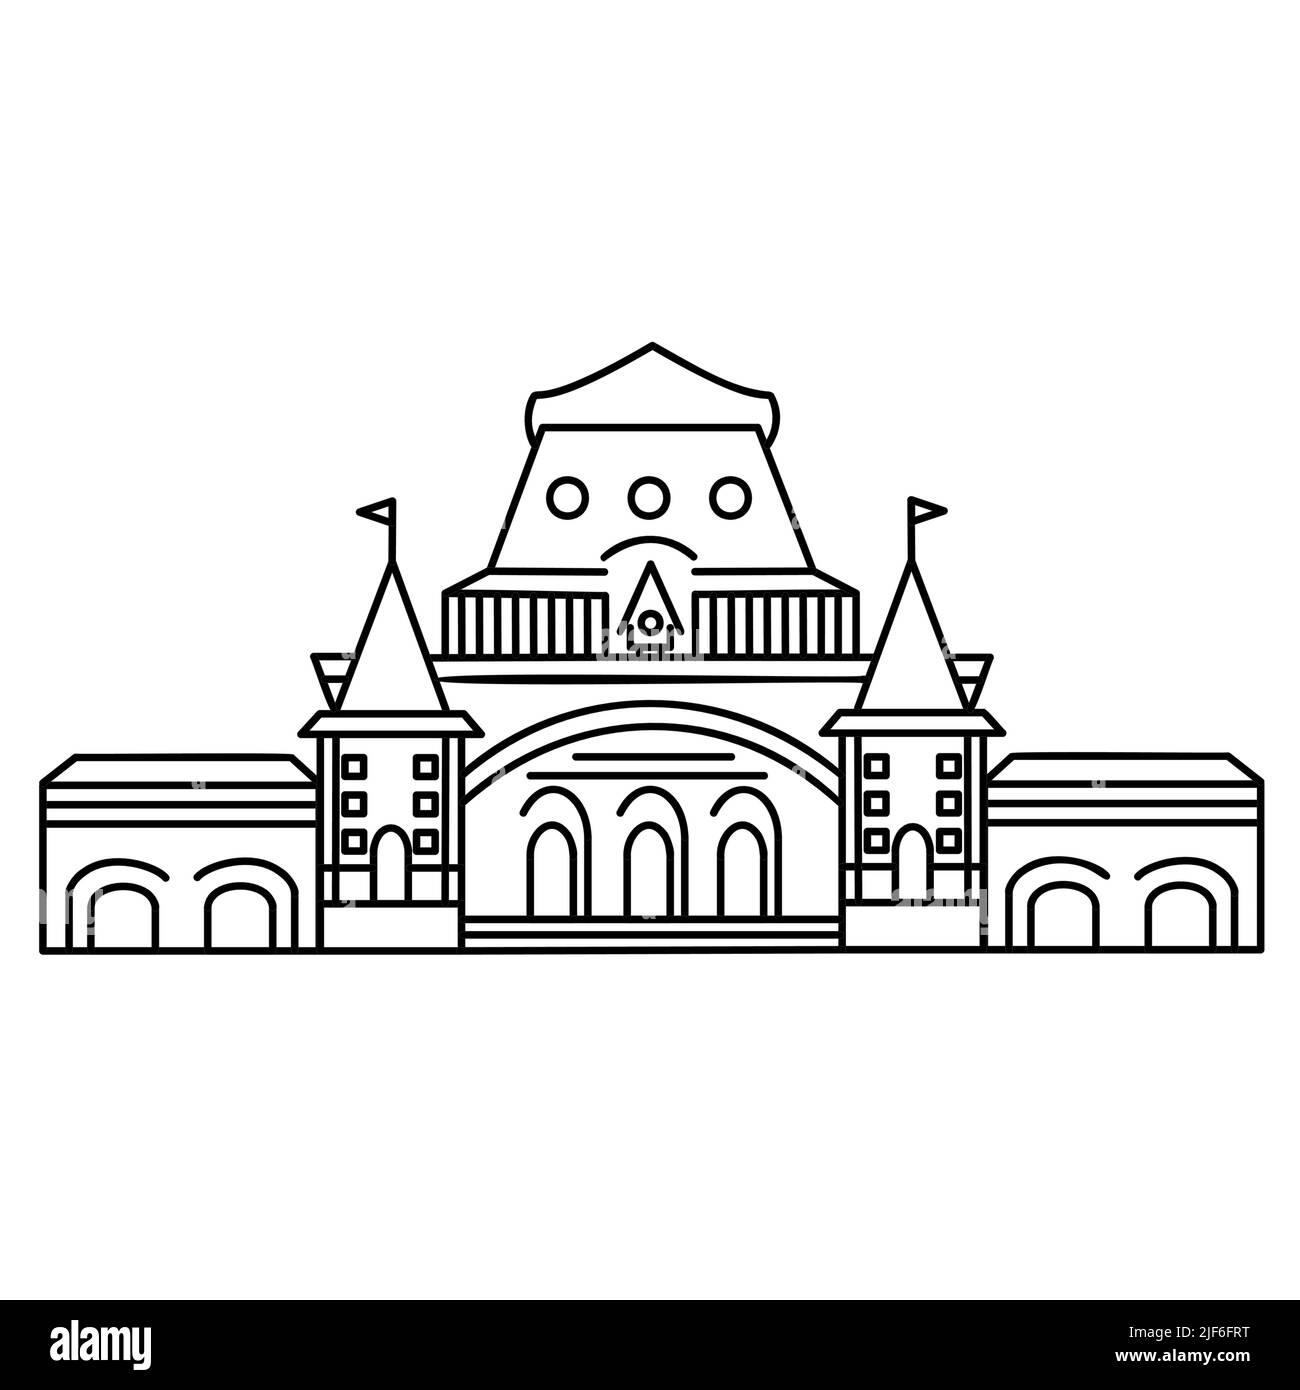 Vladivostok city illustration of railway station building. Vector illustration Stock Vector